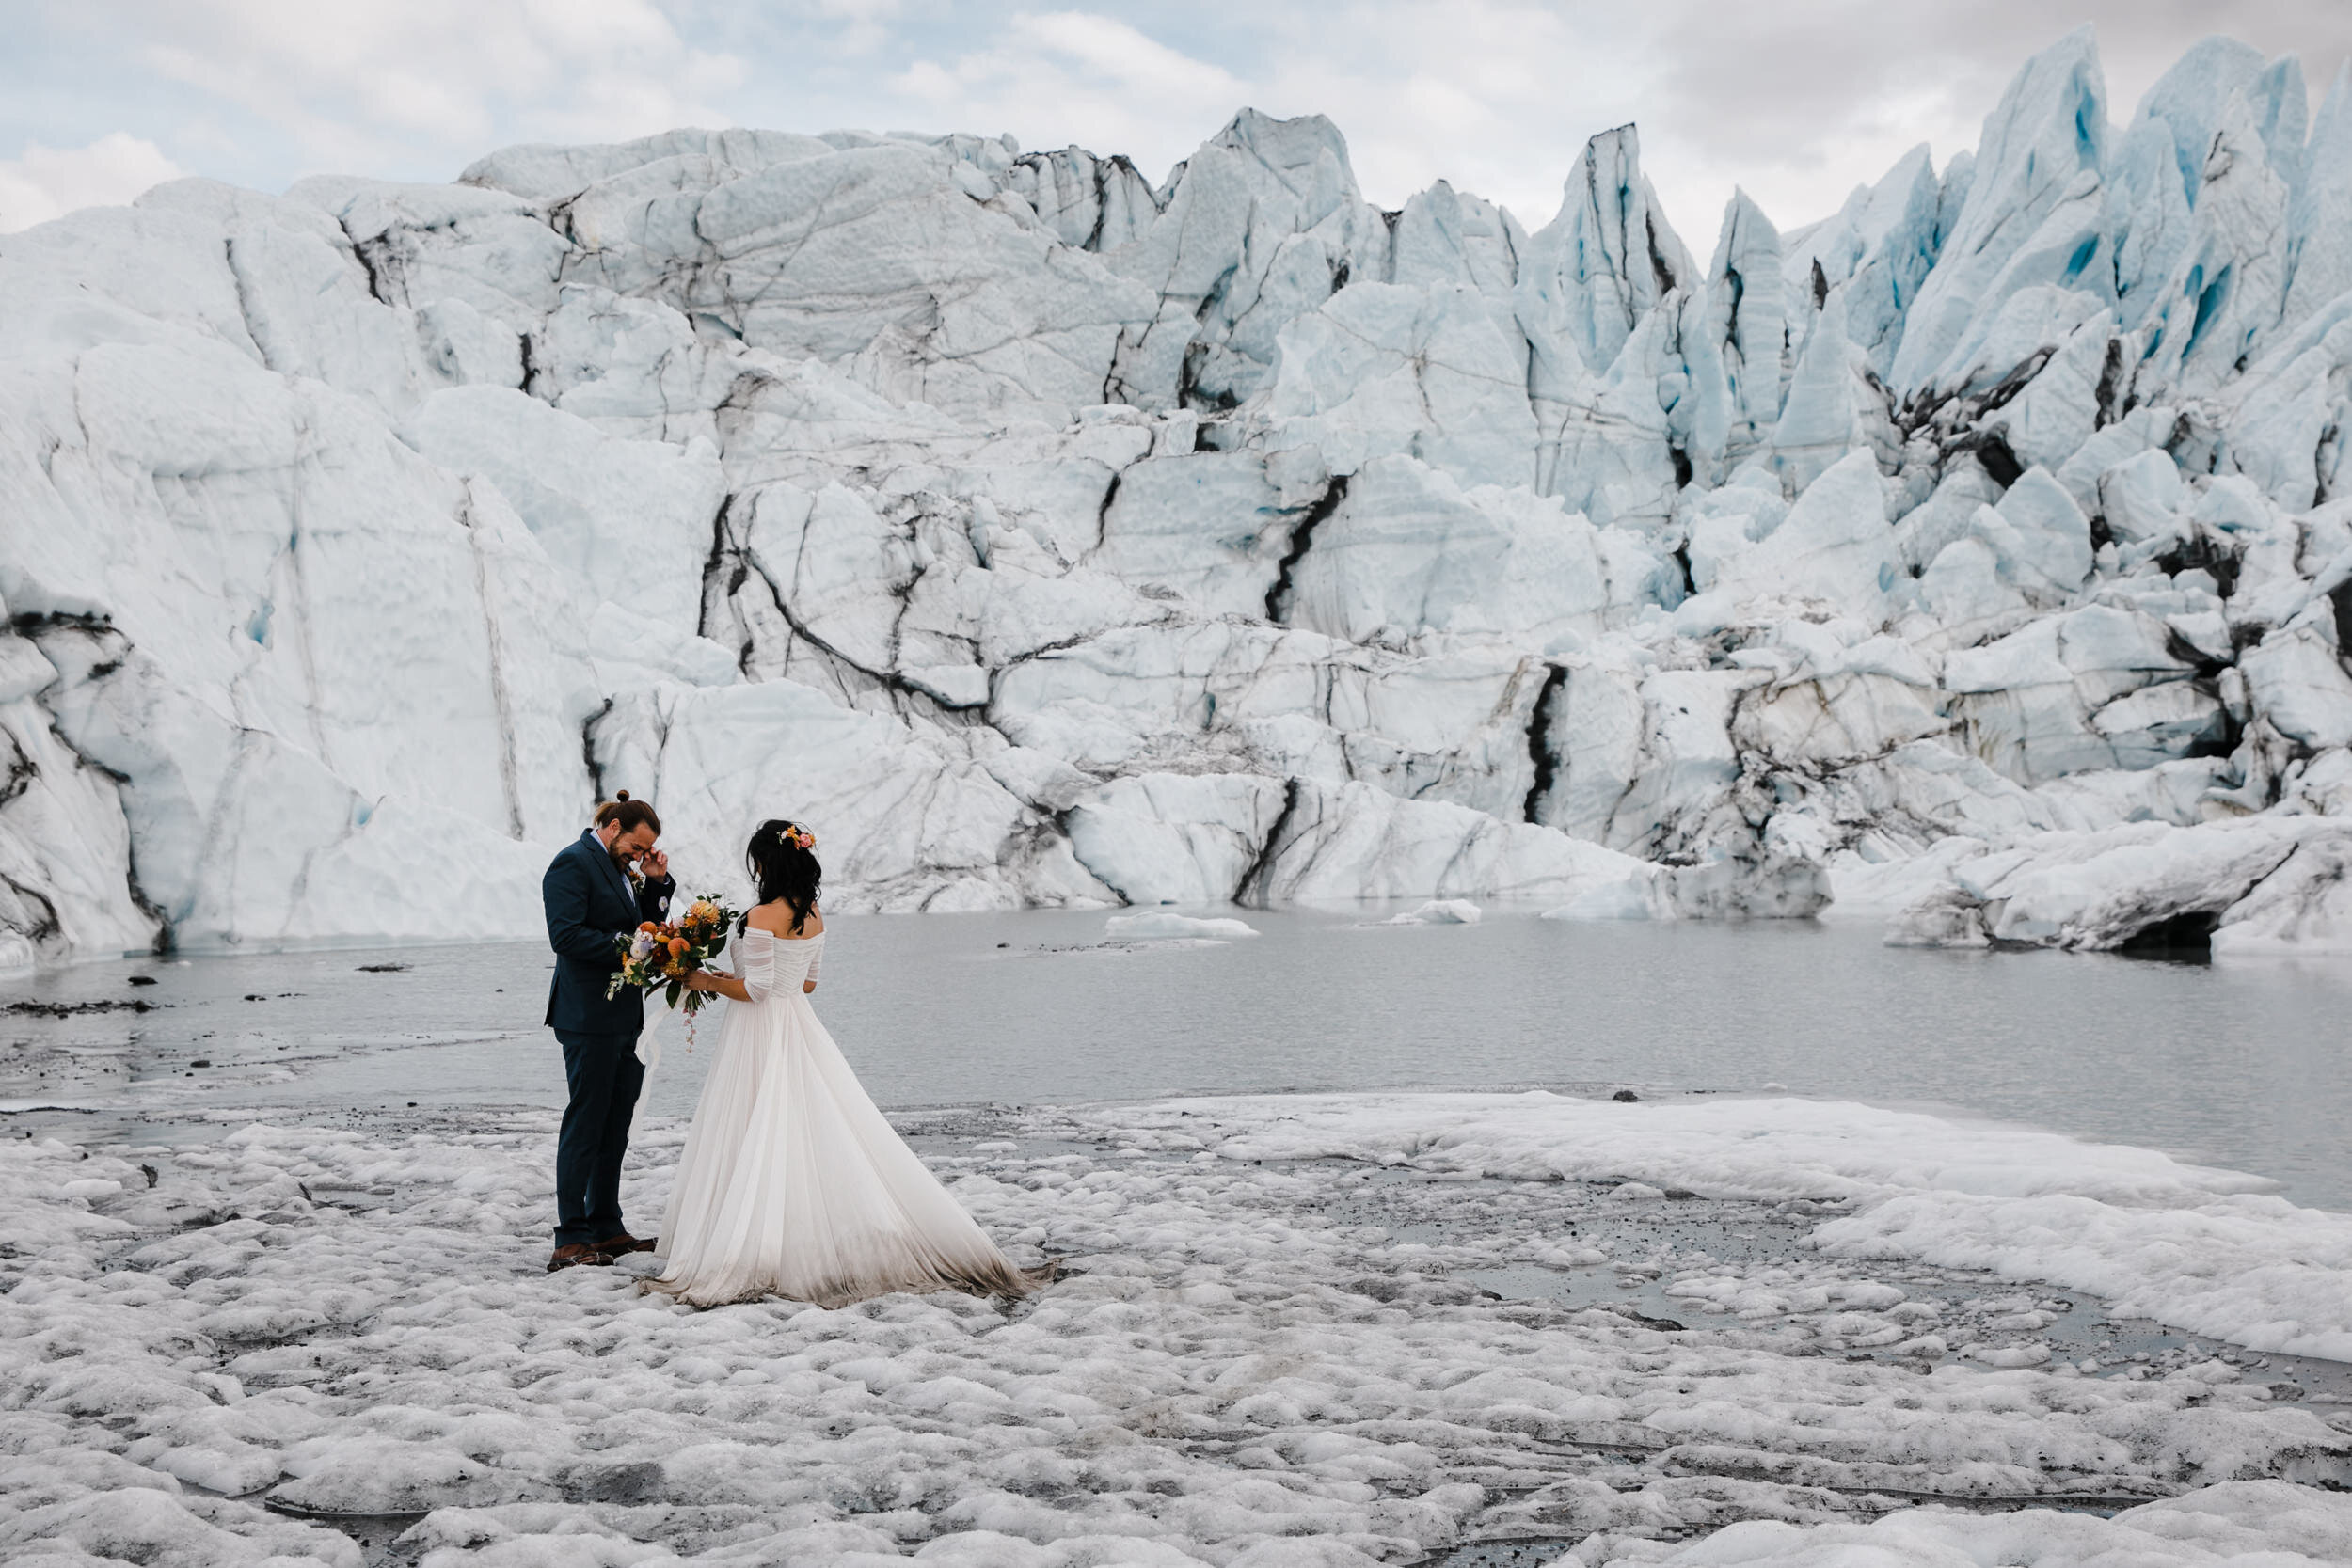 Alaska Elopement | Adventure Wedding on a Glacier | The Hearnes Photography